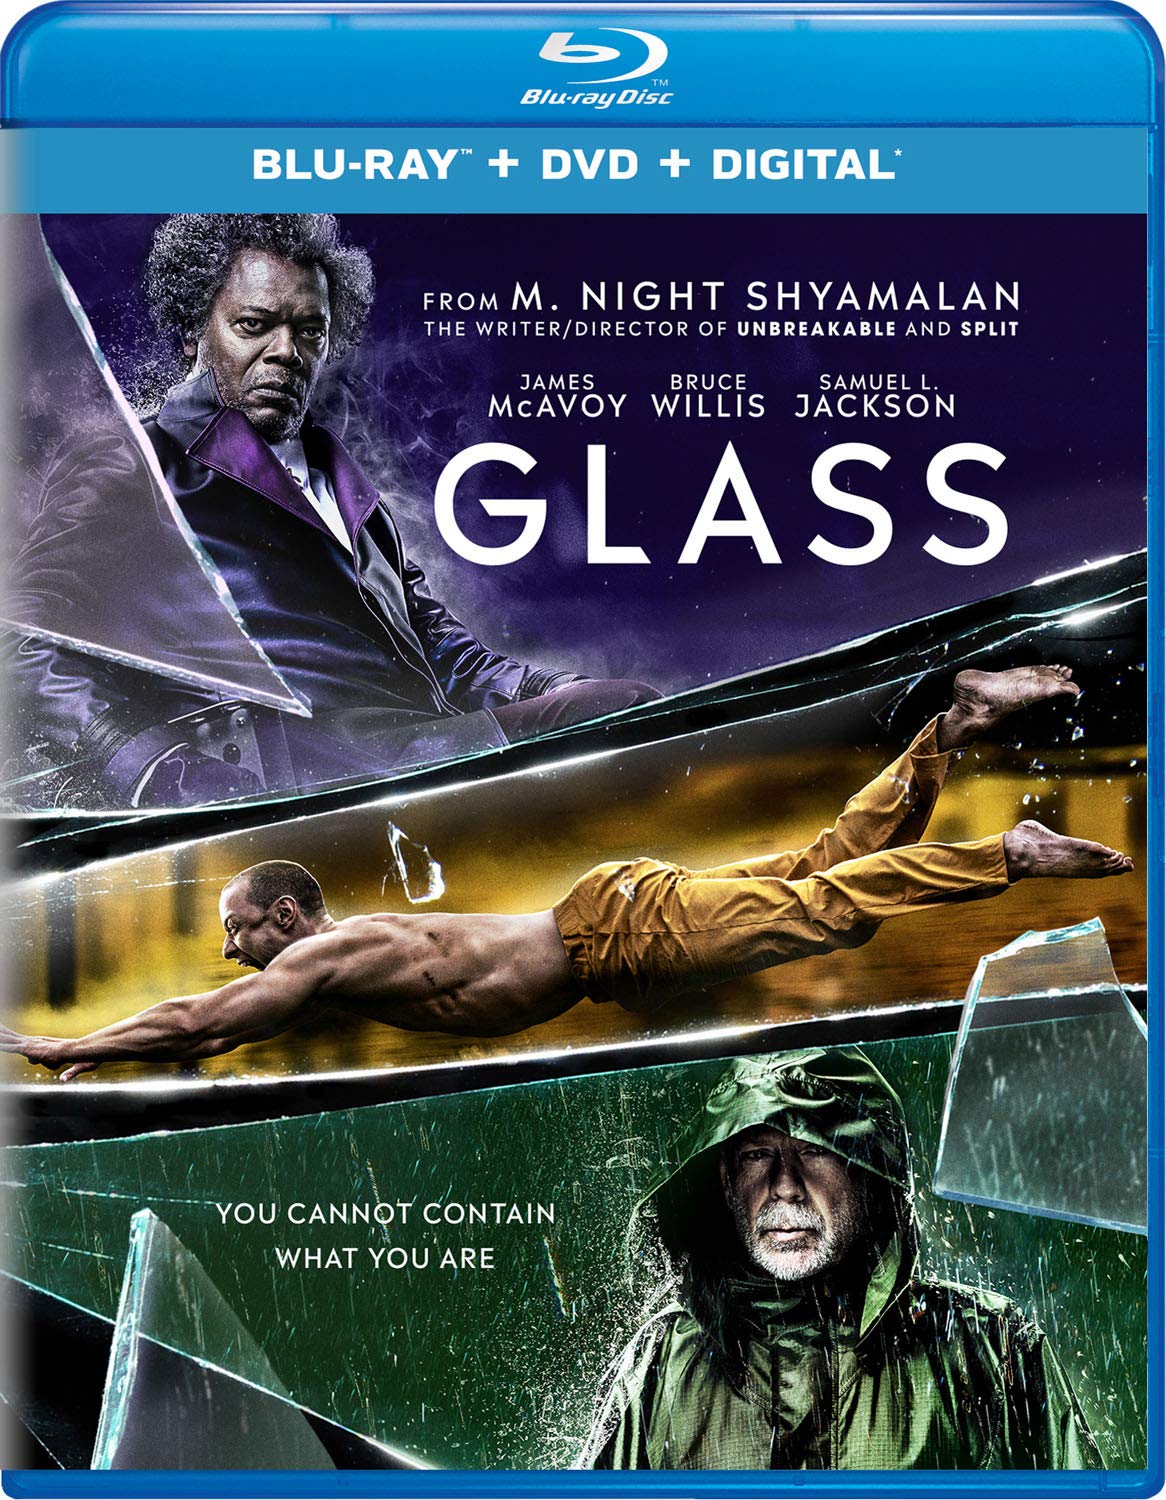 Glass on blu-ray